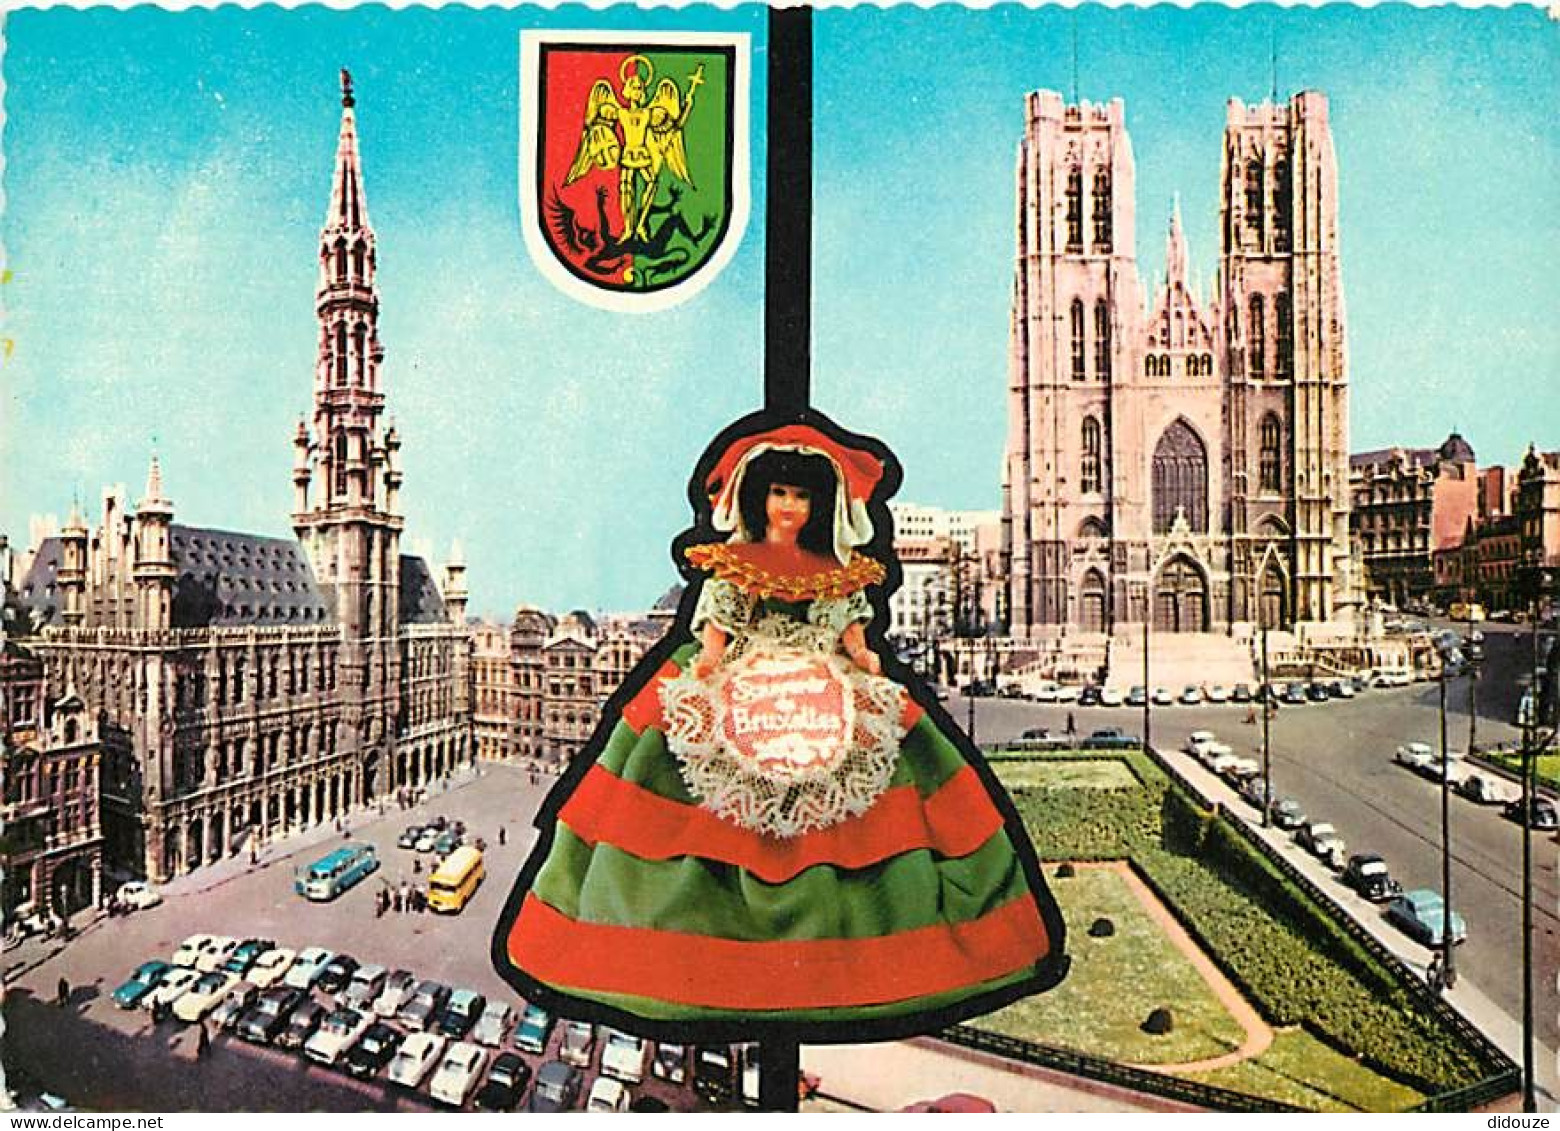 Belgique - Bruxelles - Brussel - Multivues - CPM - Voir Scans Recto-Verso - Mehransichten, Panoramakarten